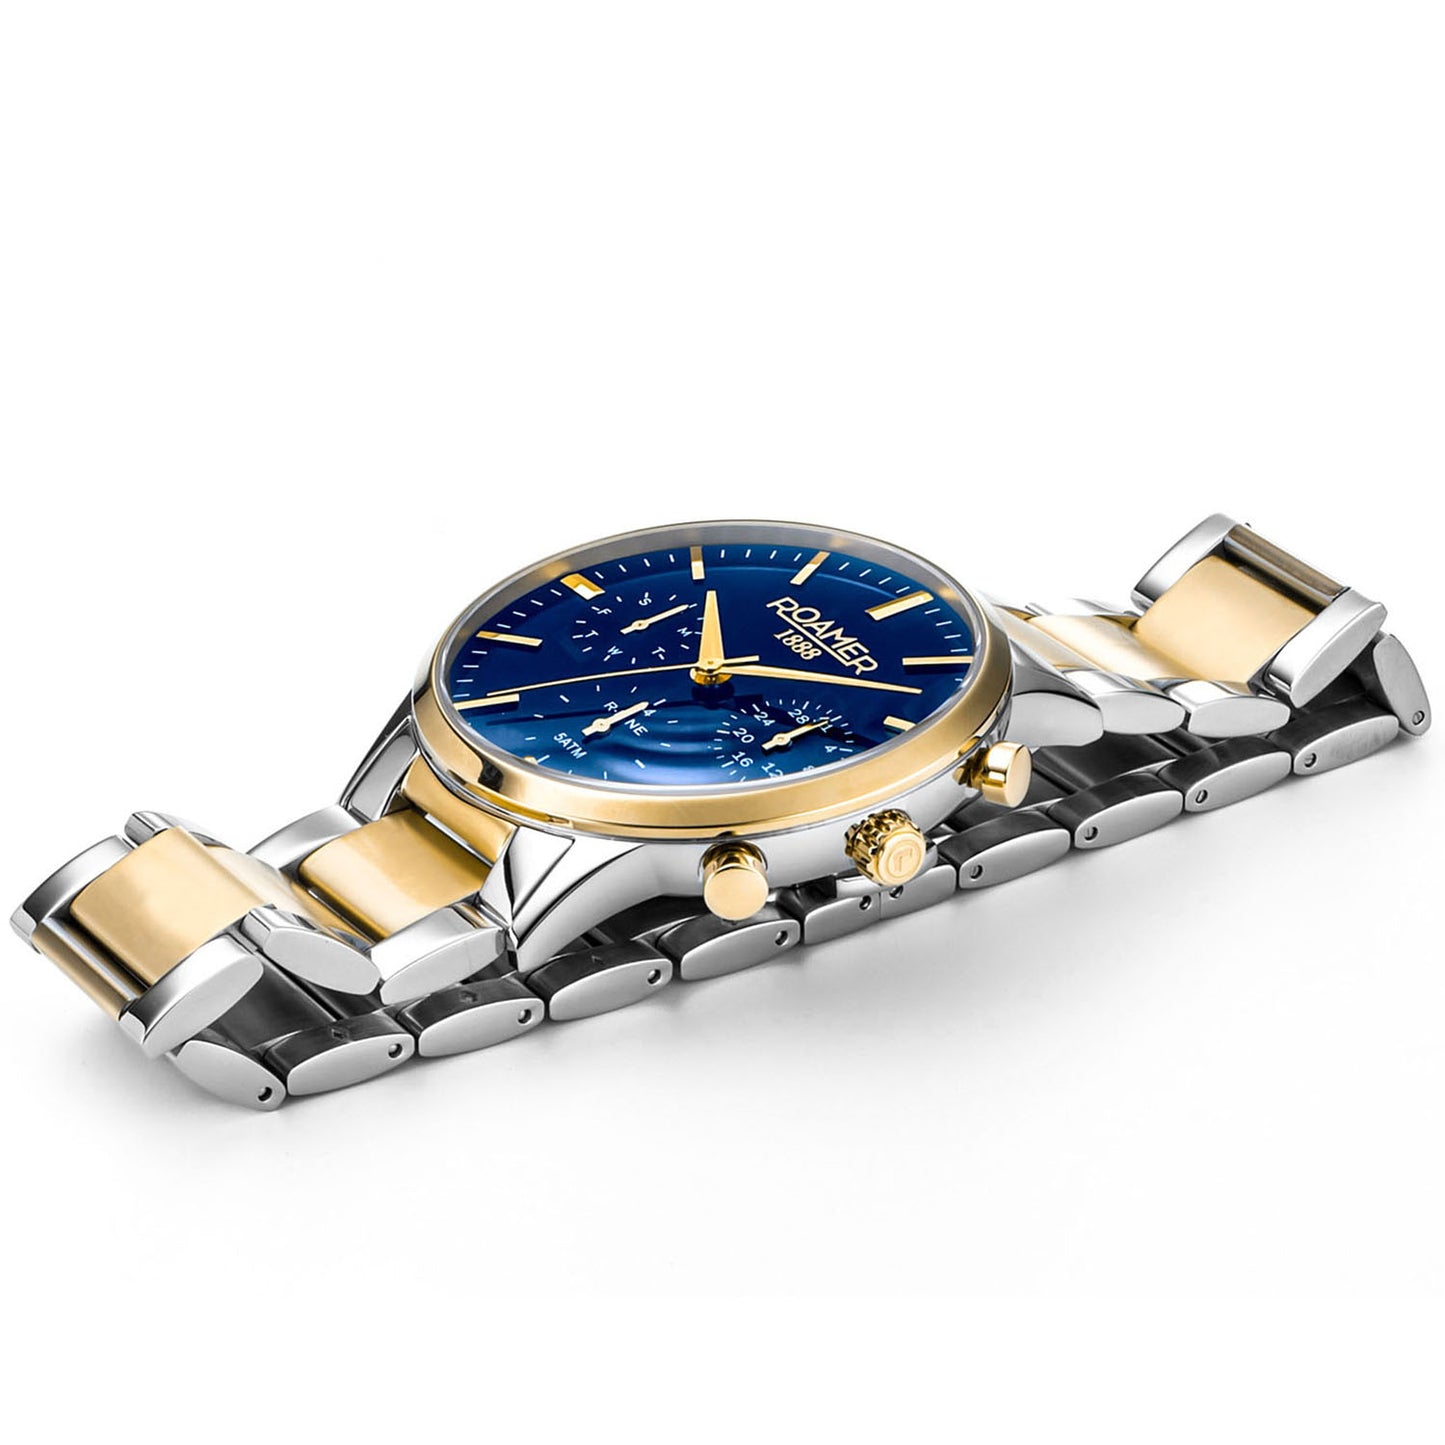 Roamer 718982 48 45 70 R line Blue Dial Two Tone Bracelet Men's Watch - mzwatcheslk srilanka